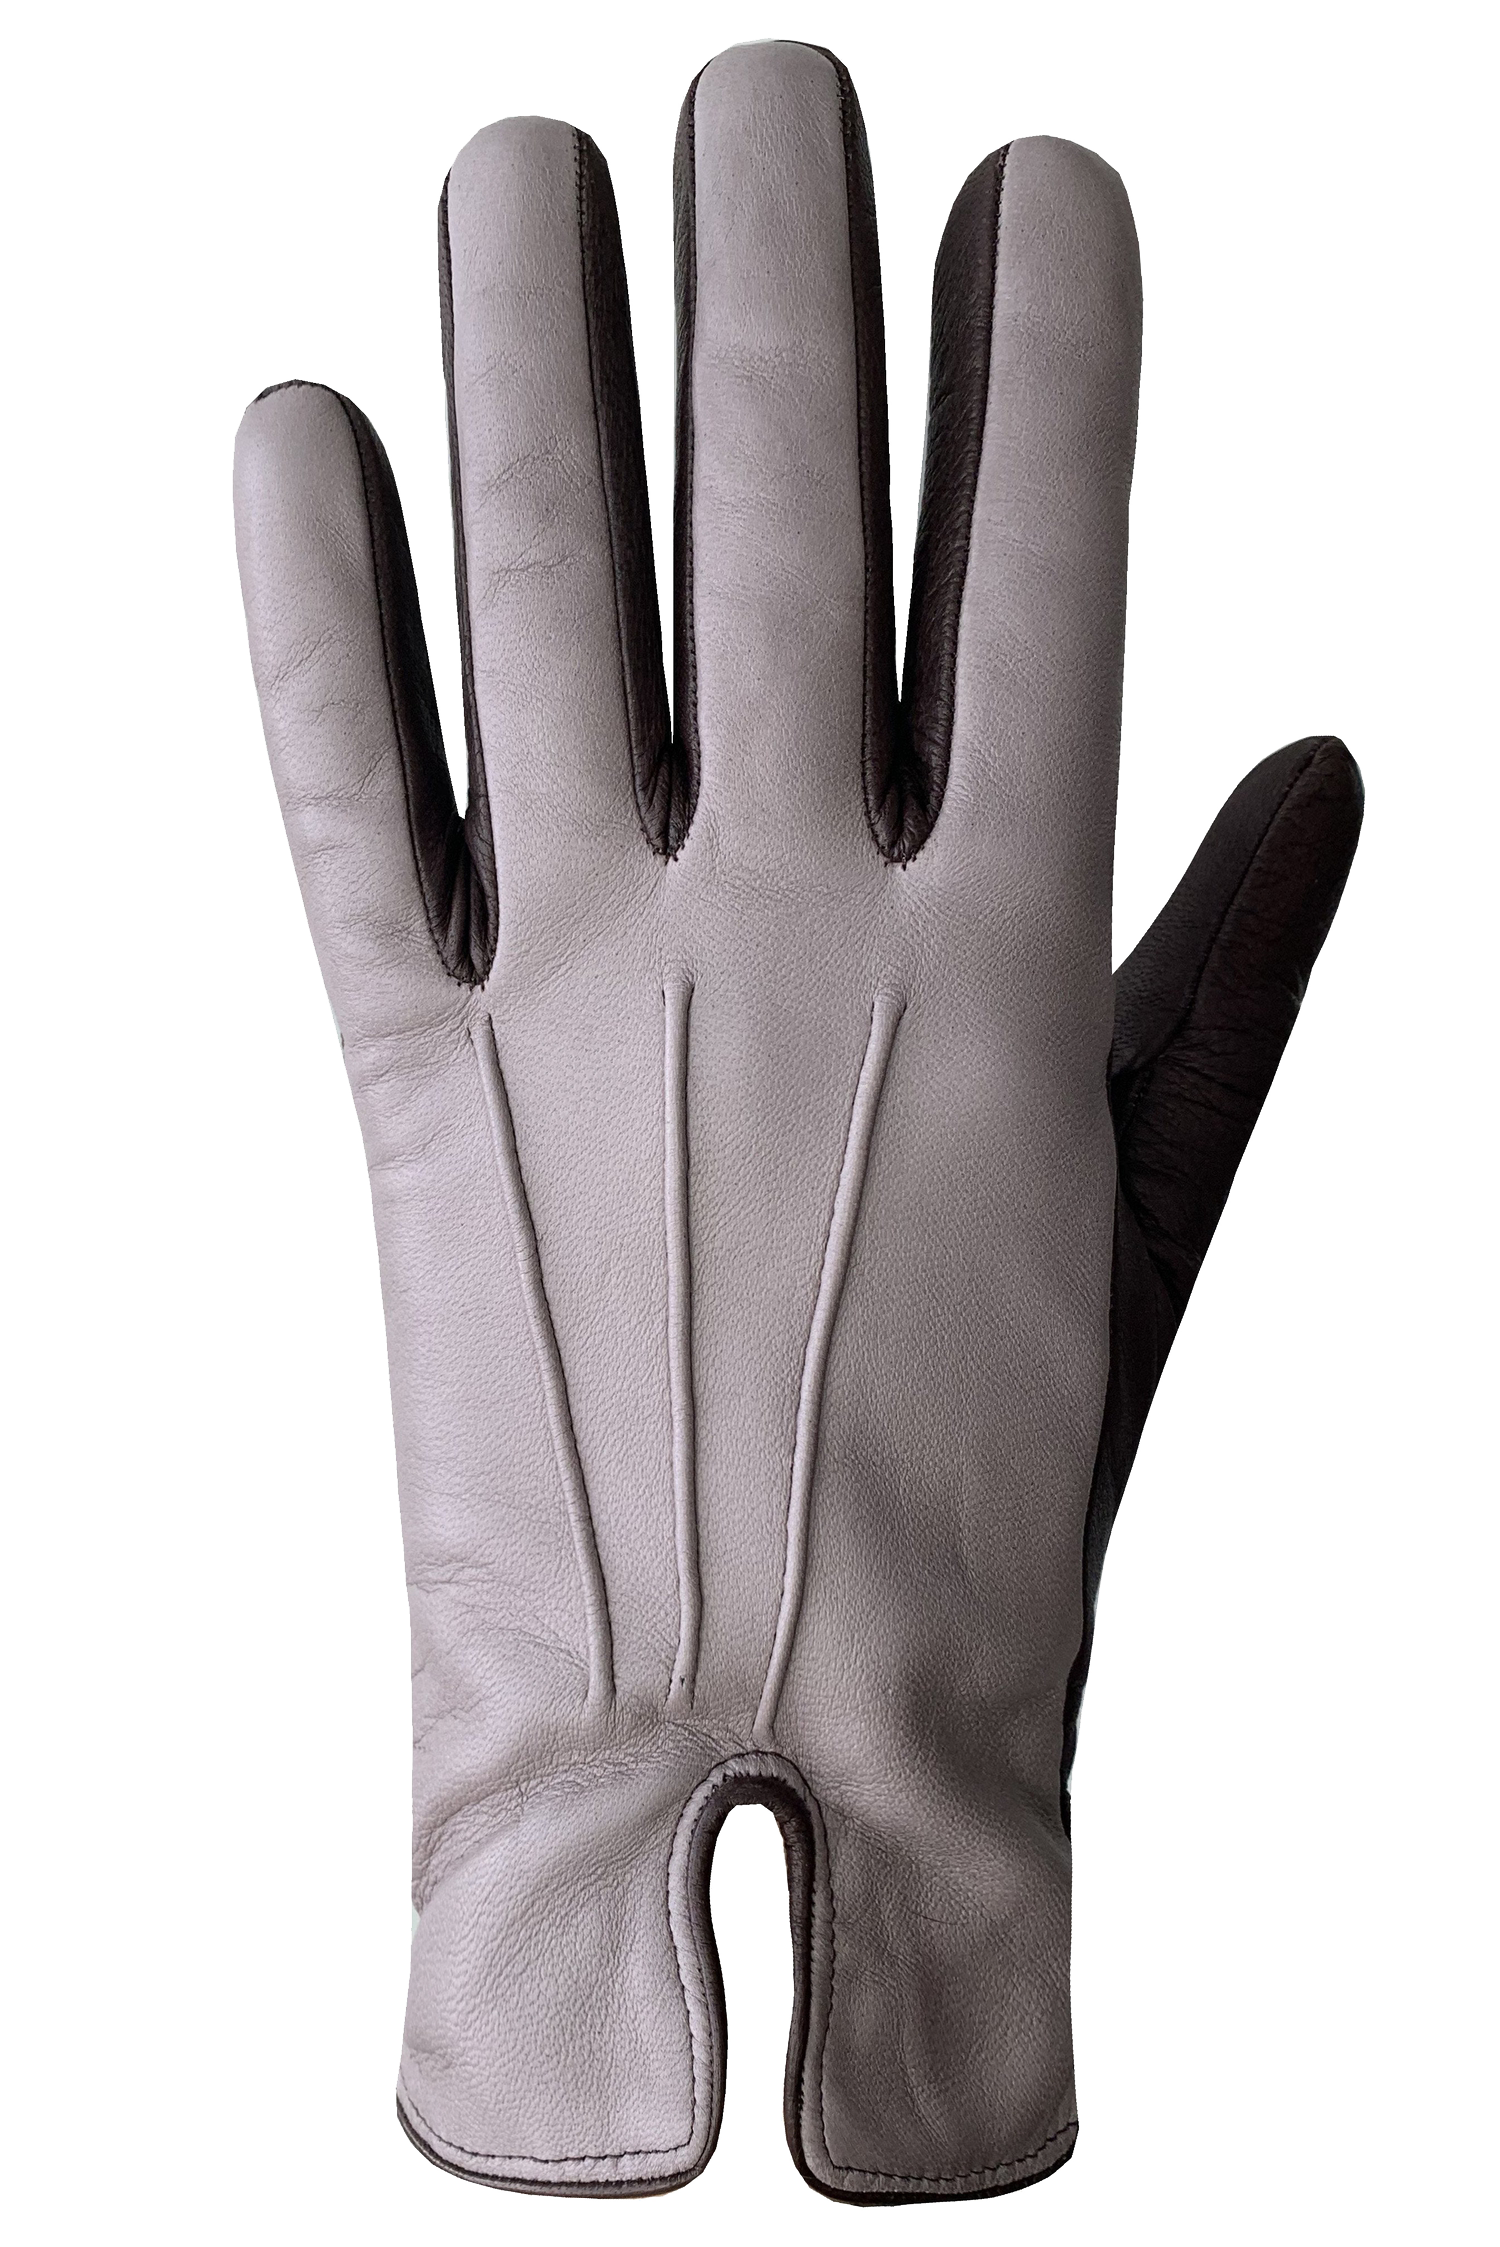 Ravenna Gloves - Women-Glove-Auclair-7.5-MUSHROOM/TAUPE-Auclair Sports